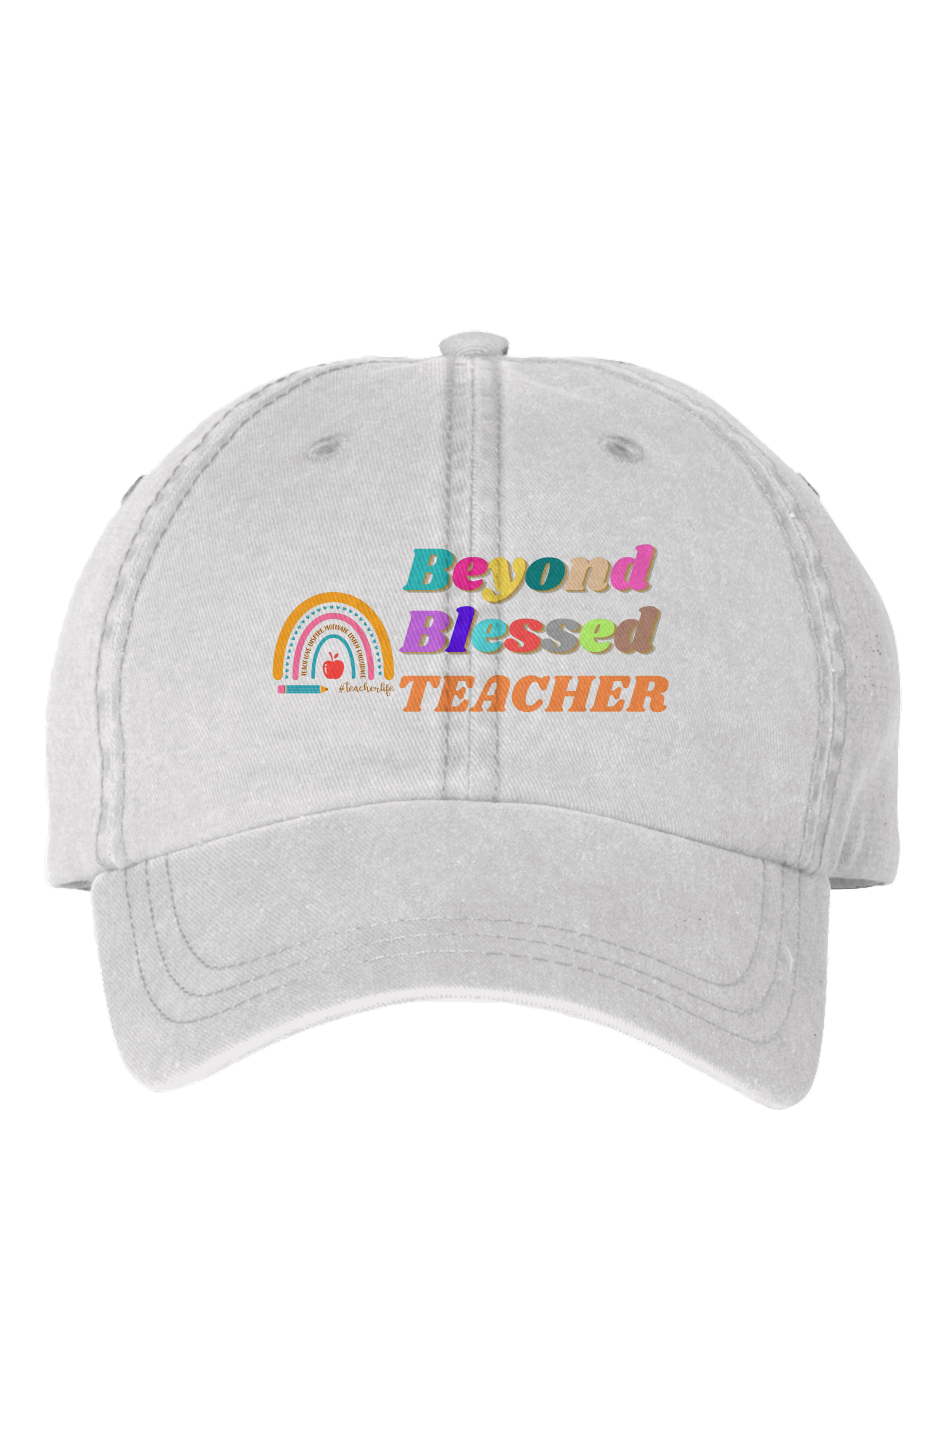 Beyond Blessed Teacher - Dyed Cap